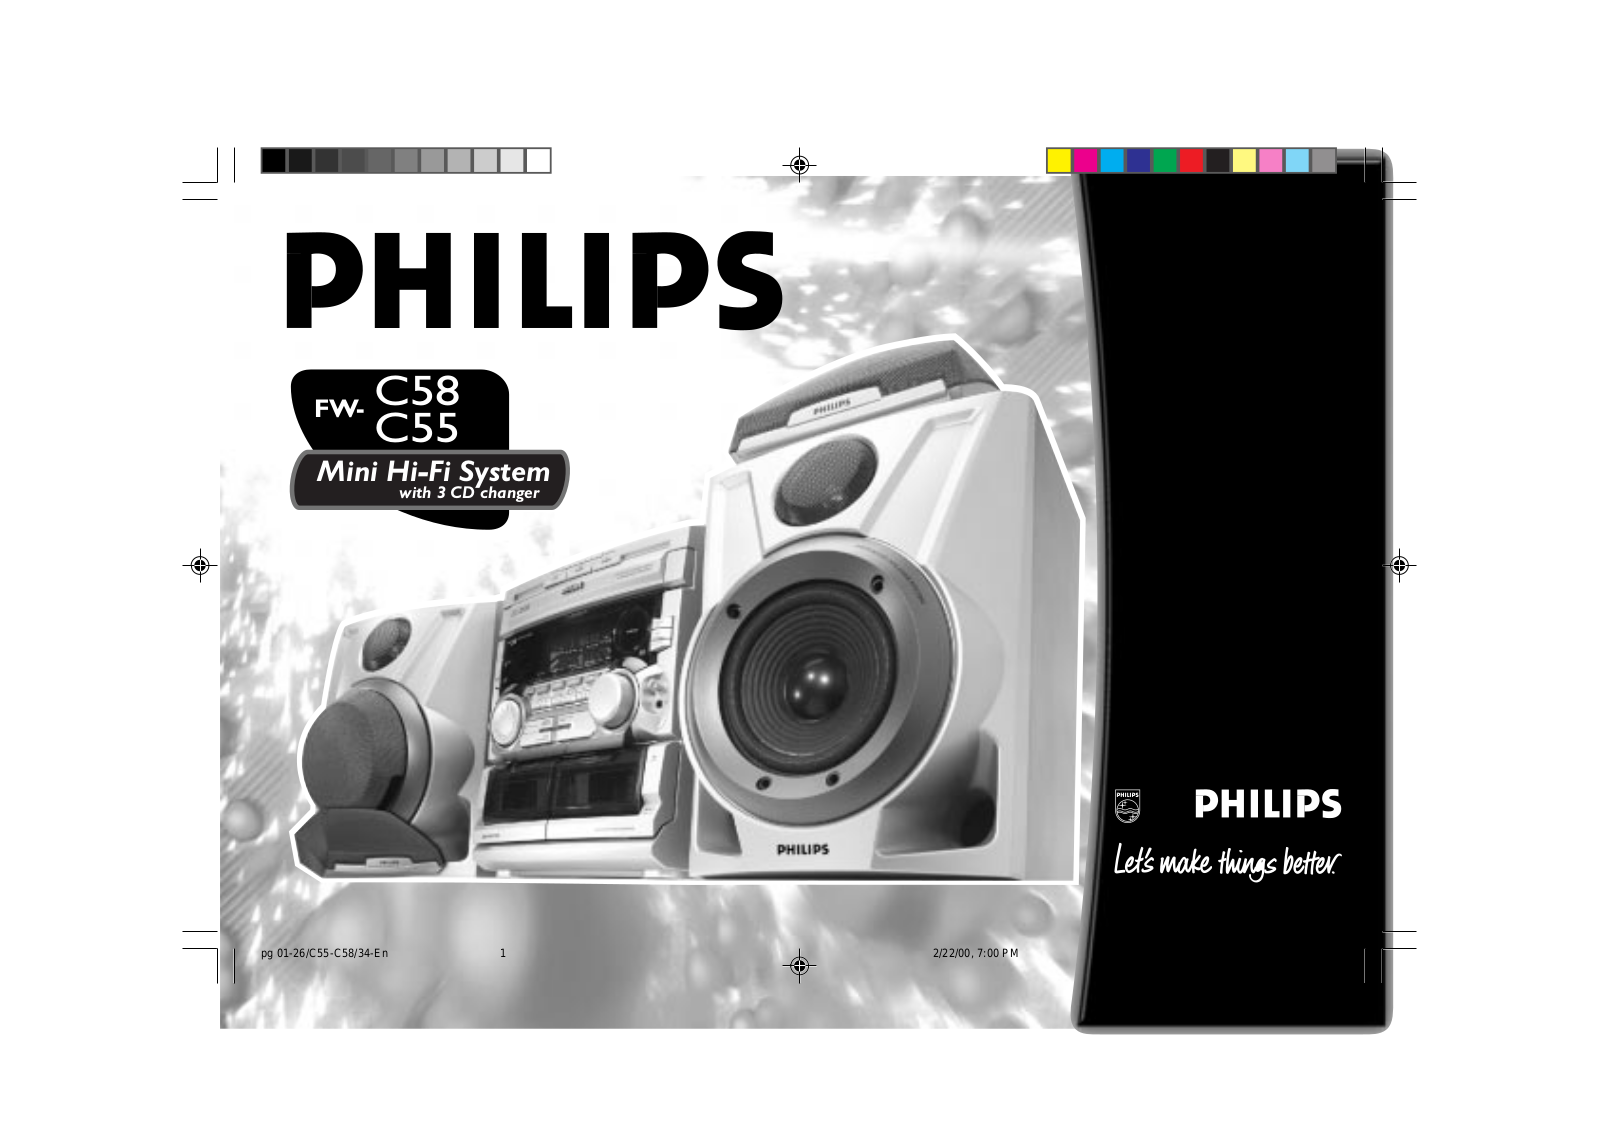 Philips FW-C58 User Manual